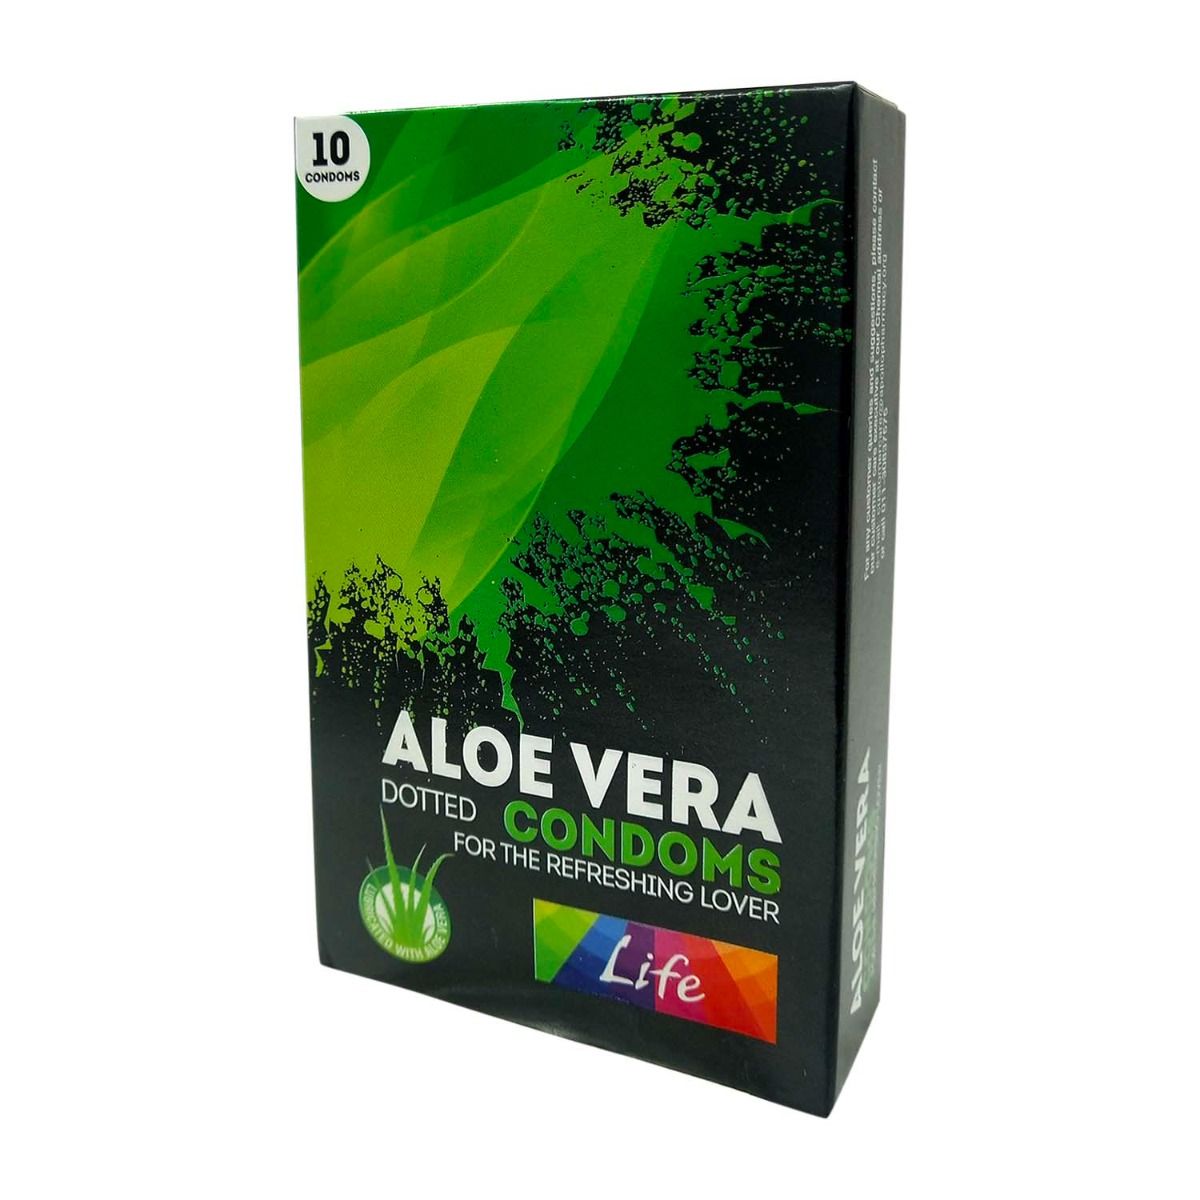 Apollo Life Aloe Vera Dotted Condoms, 10 Count, Pack of 1 